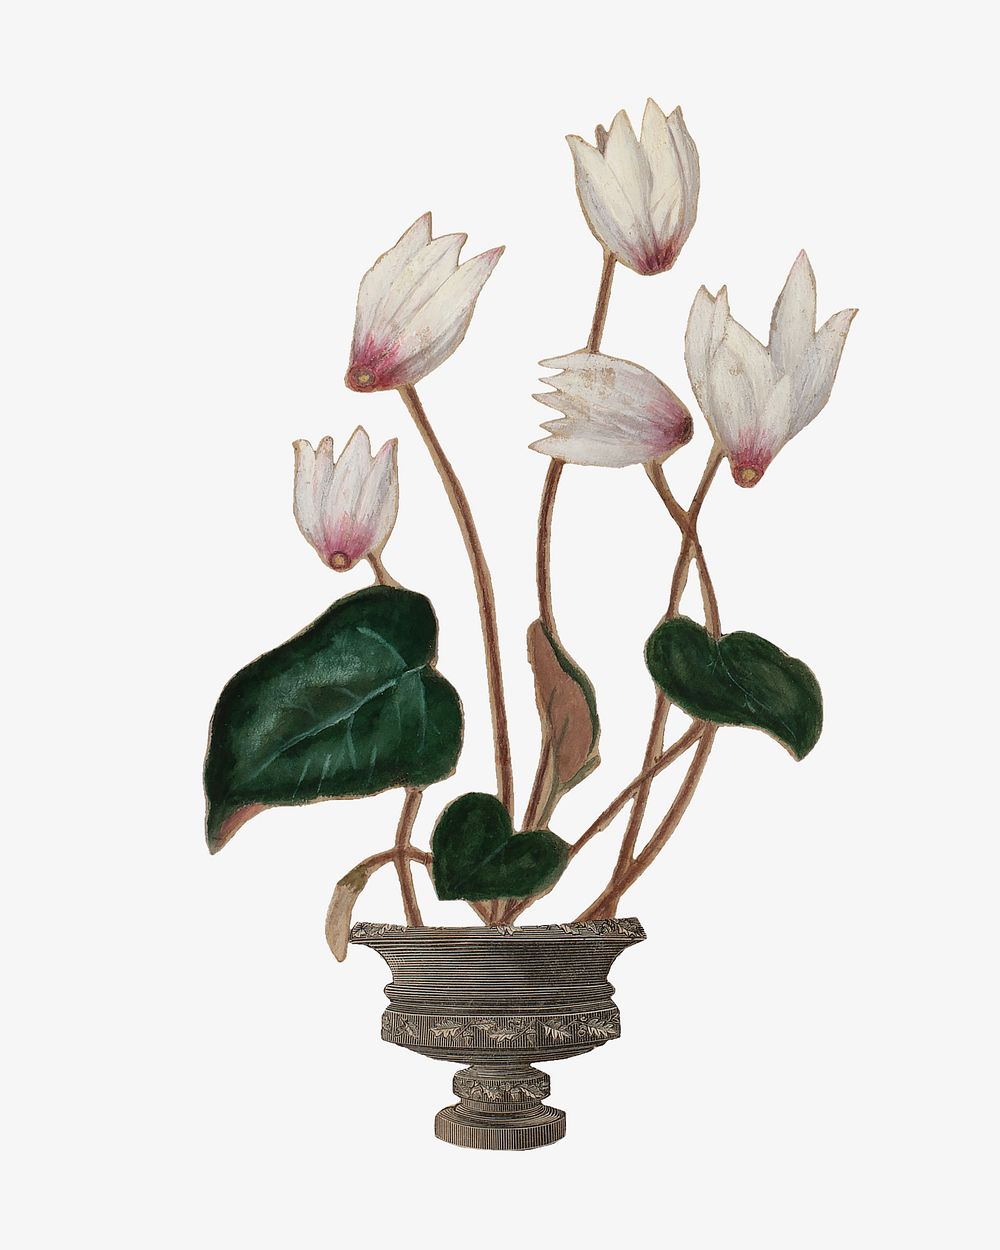 White lotus flower illustration. Remastered by rawpixel.